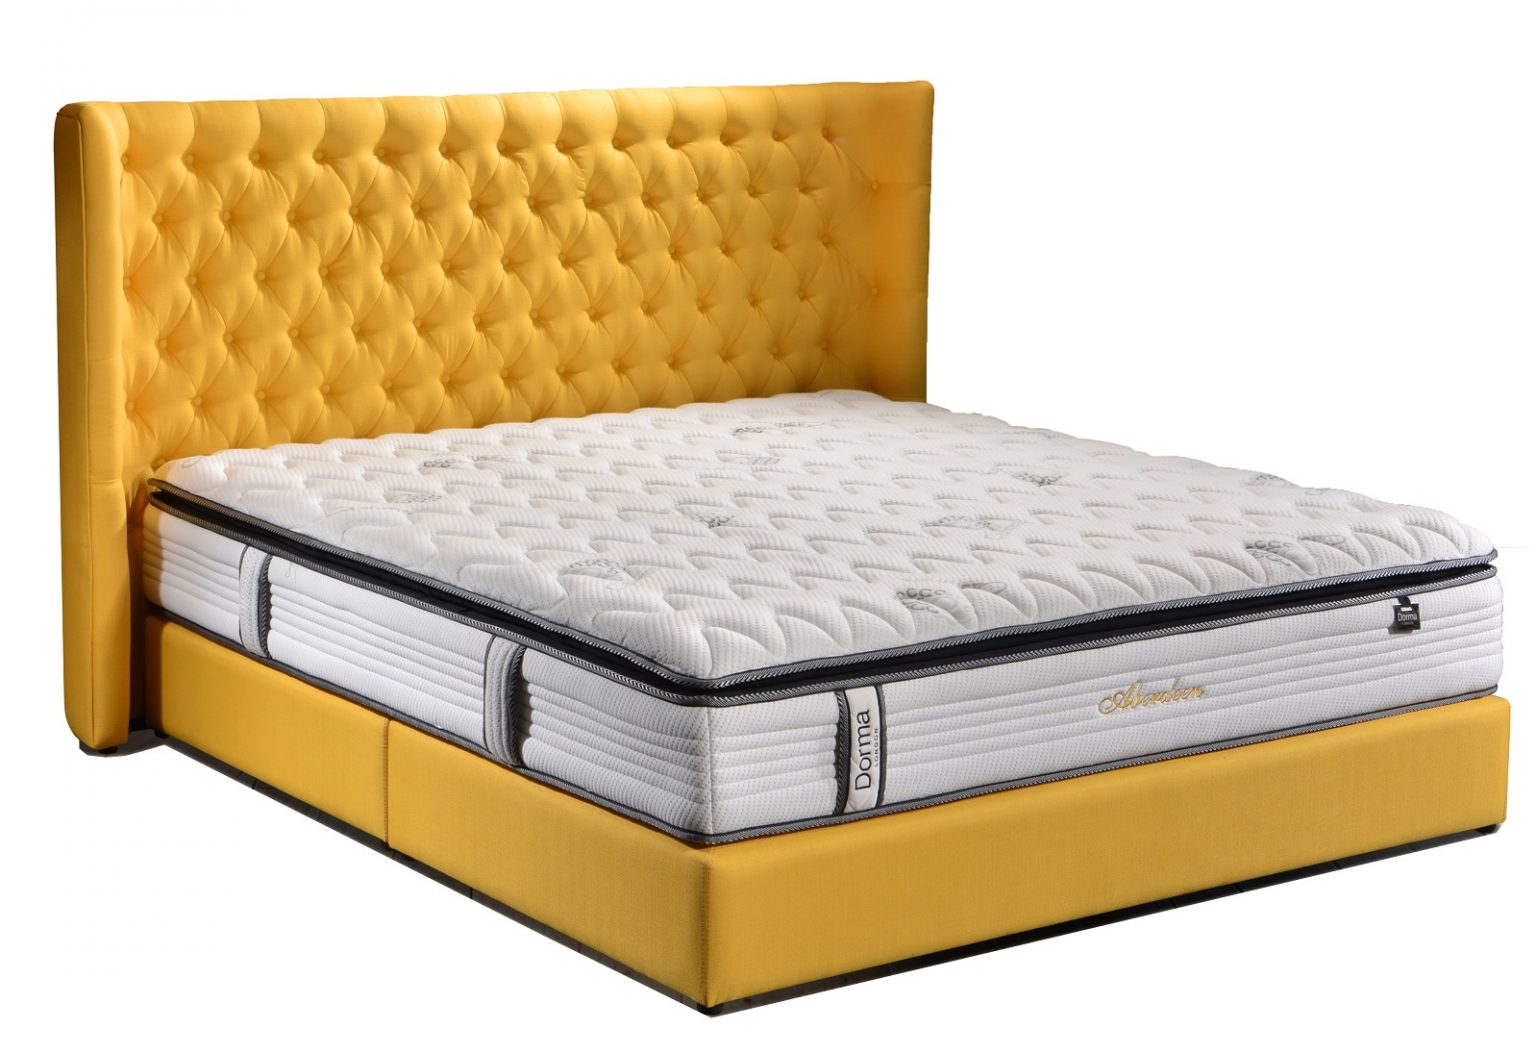 dorma mattress price malaysia